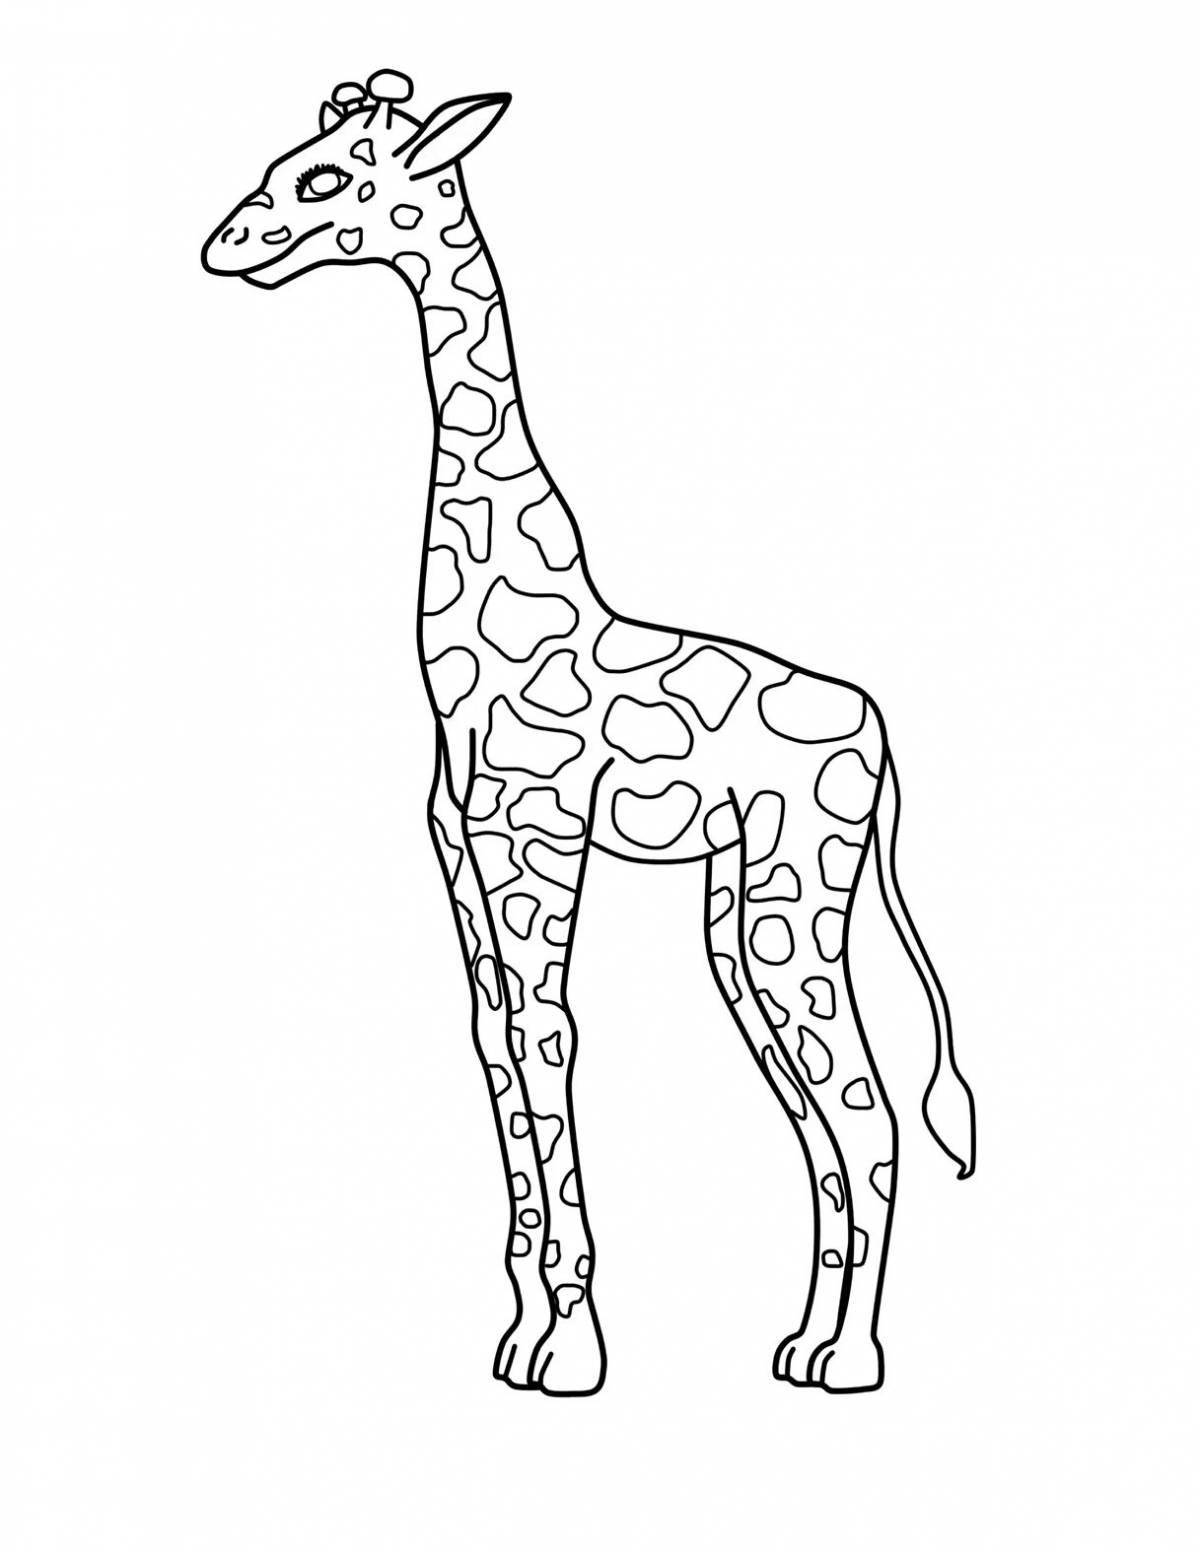 Giraffe picture for kids #3